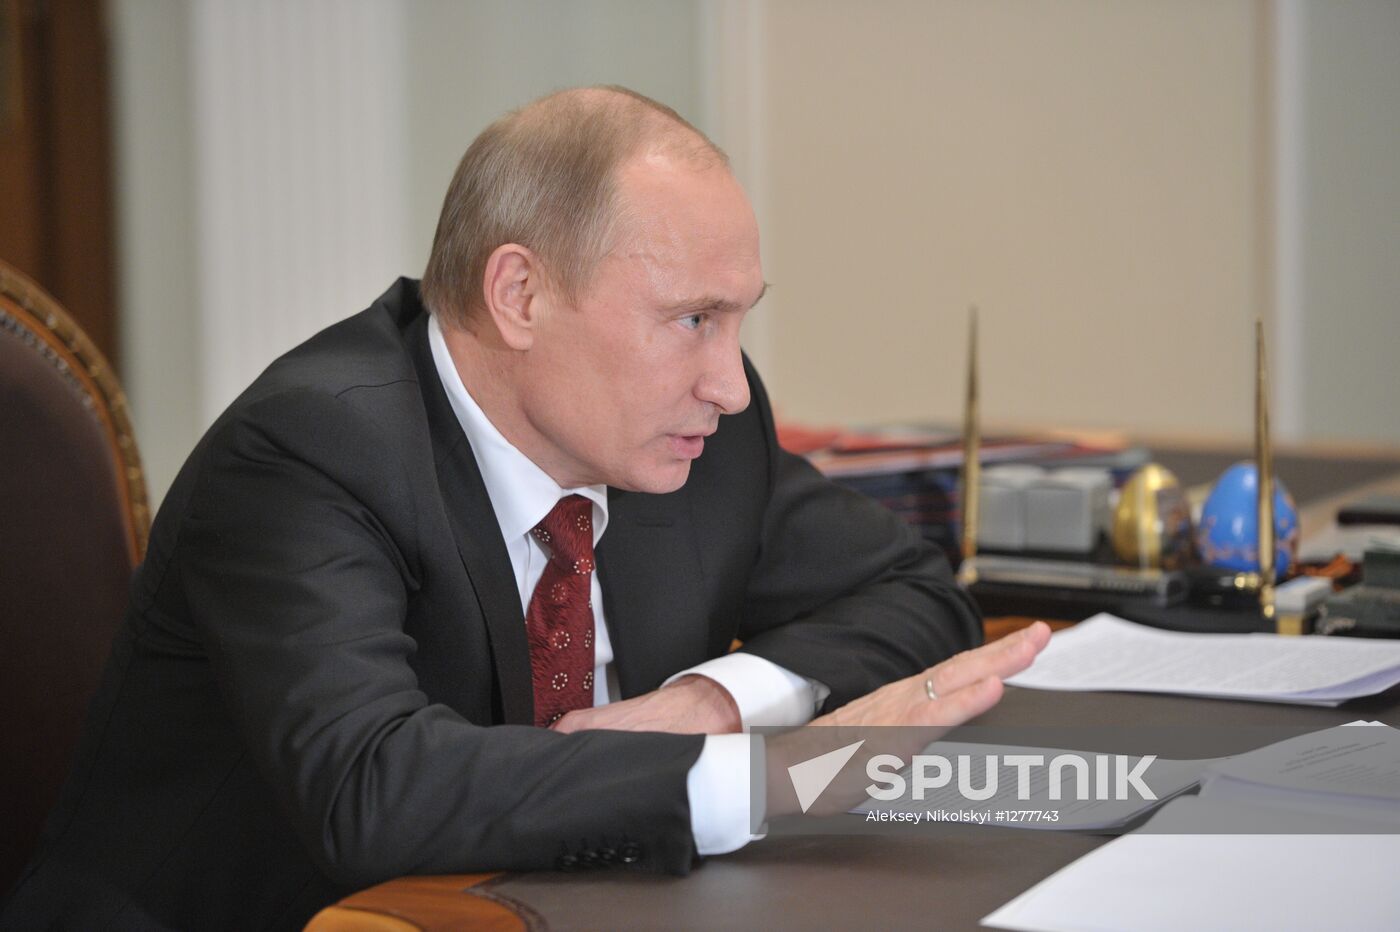 Vladimir Putin meets with Mikhail Fedotov